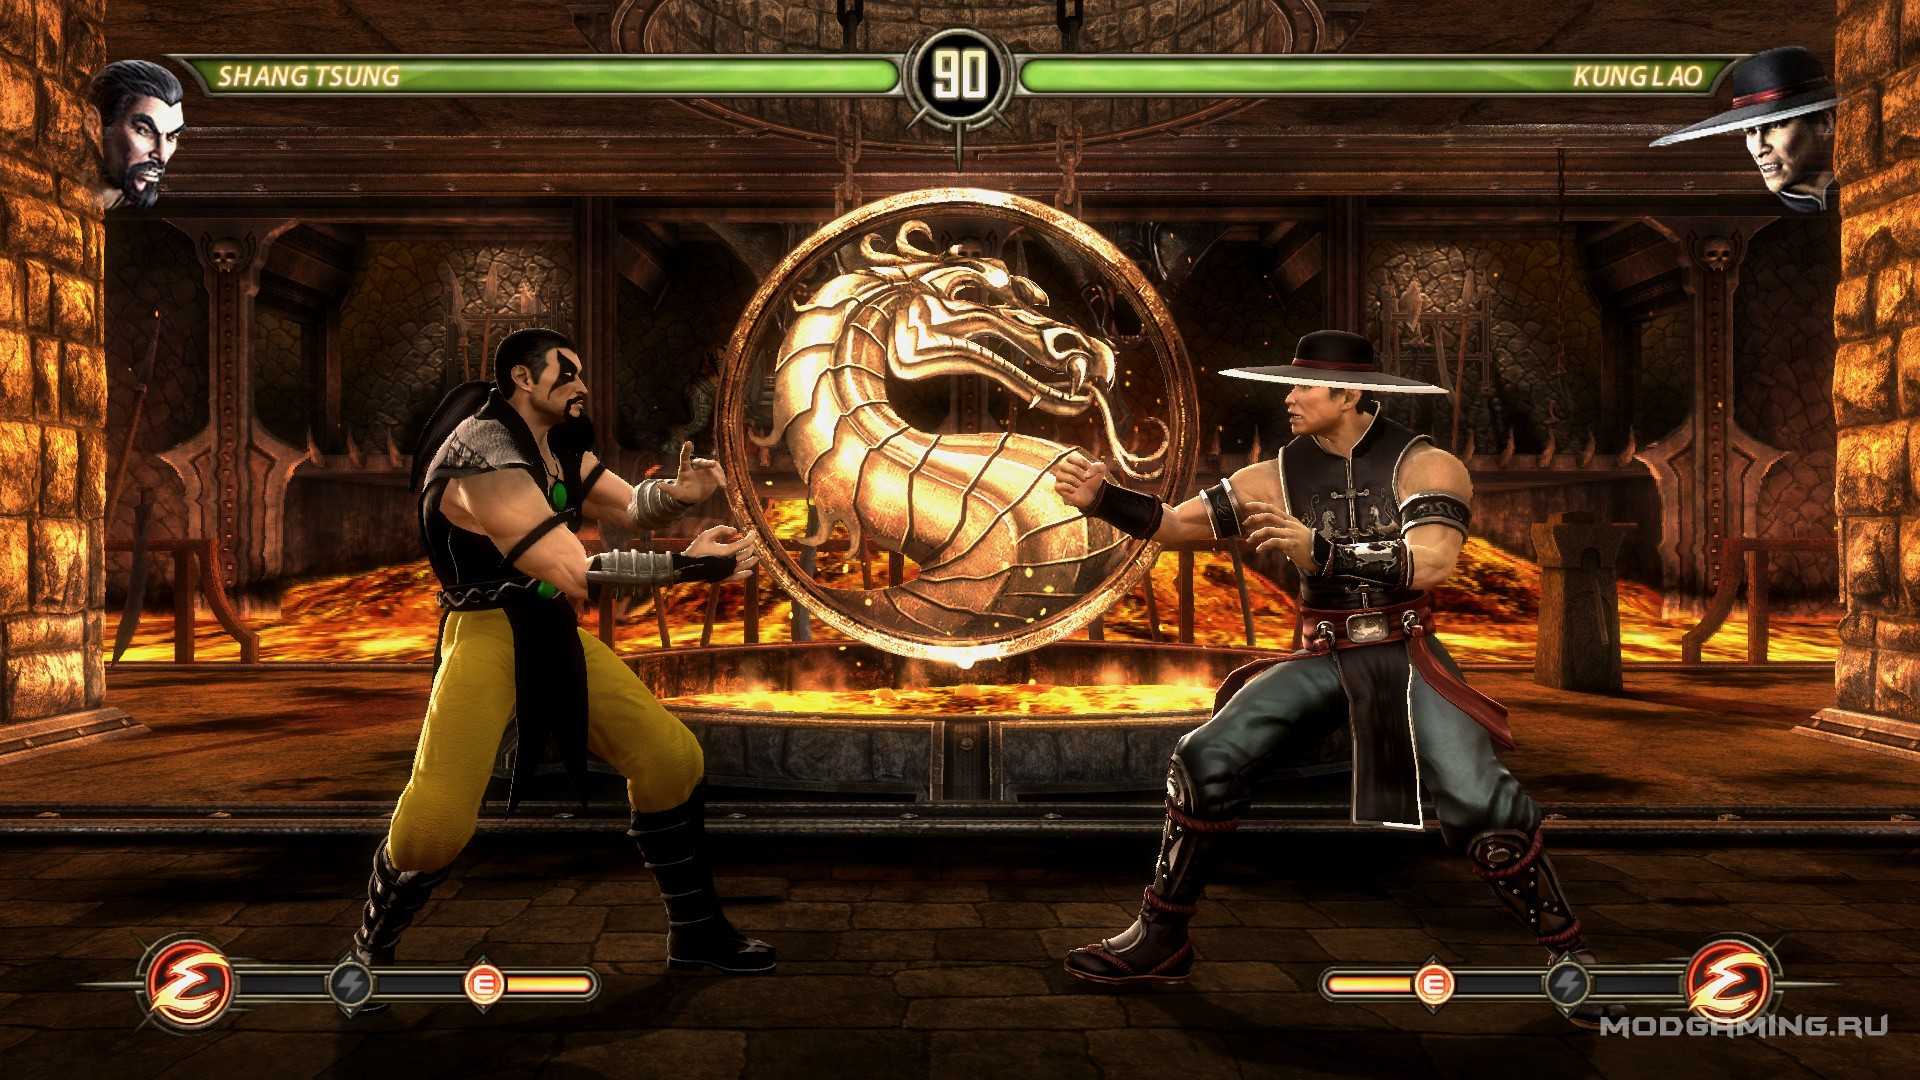 Мортал комбат без скачивания. Шанг Цунг мортал комбат 3. Игра мортал комбат игра мортал комбат. Mortal Mortal Kombat 3 Shang Tsung. Mortal Kombat 2002.